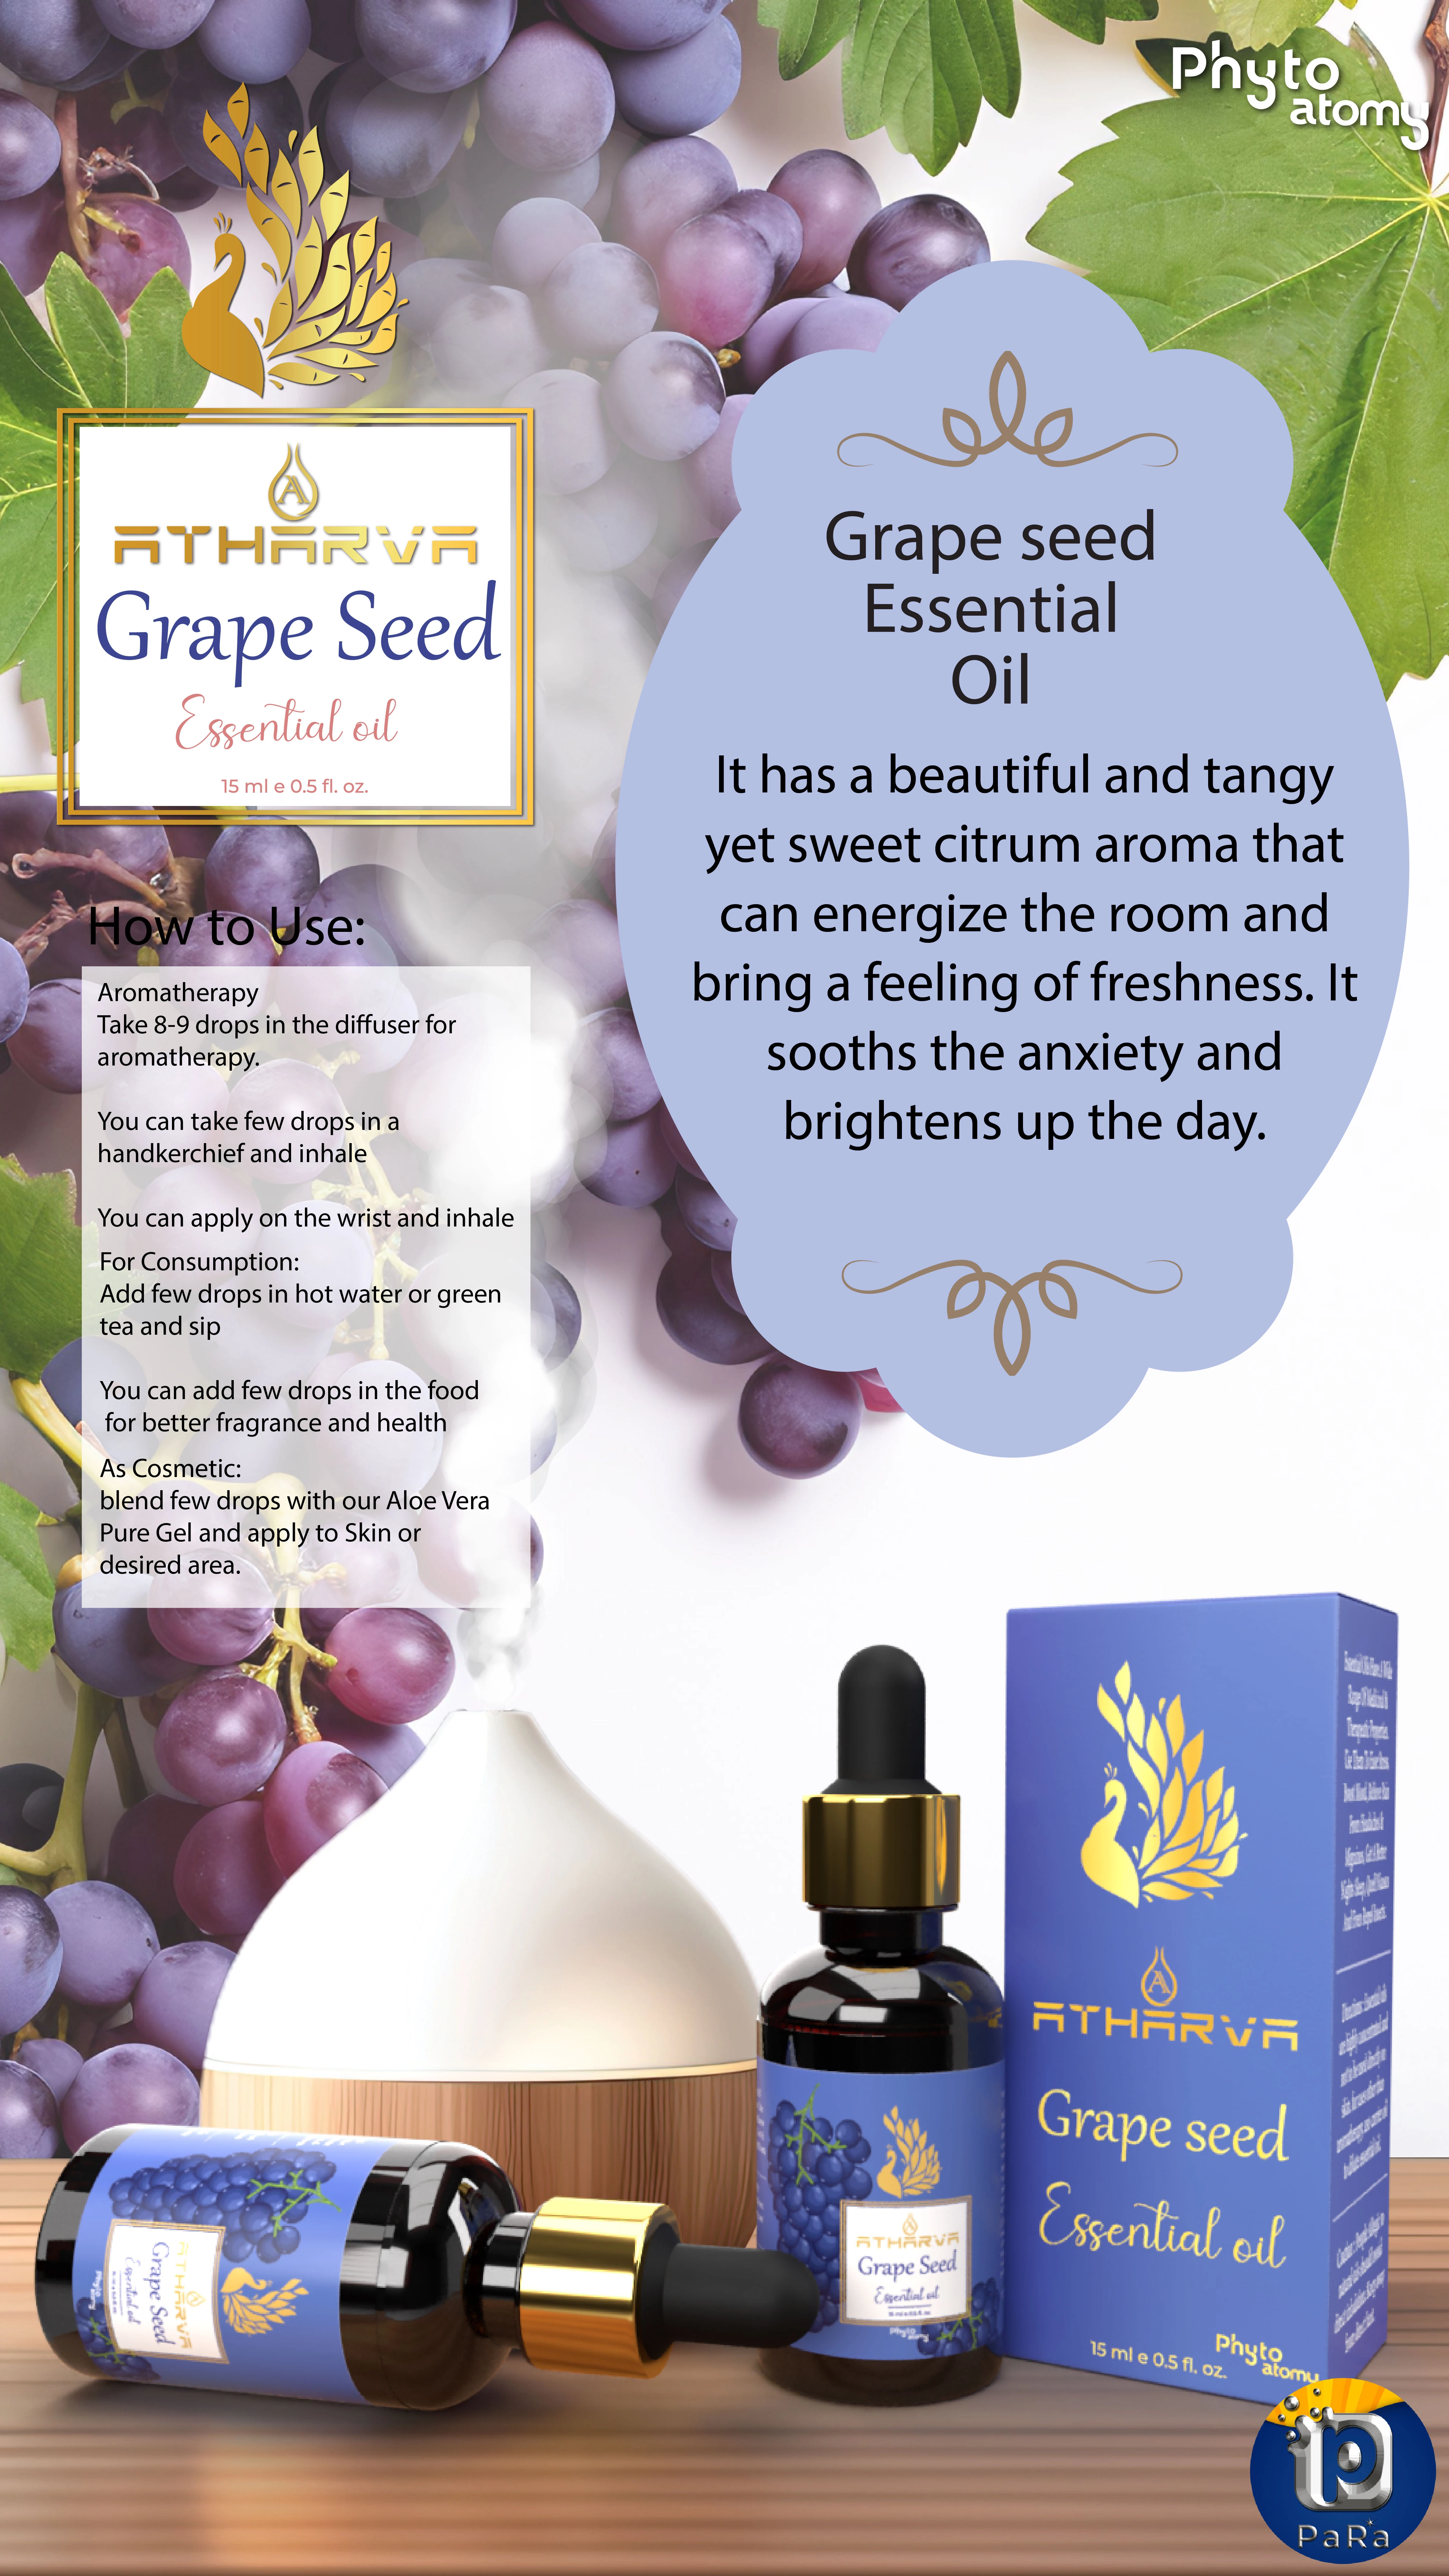 RBV B2B Atharva Grape Seed Essential Oil (15ml)-12 Pcs.